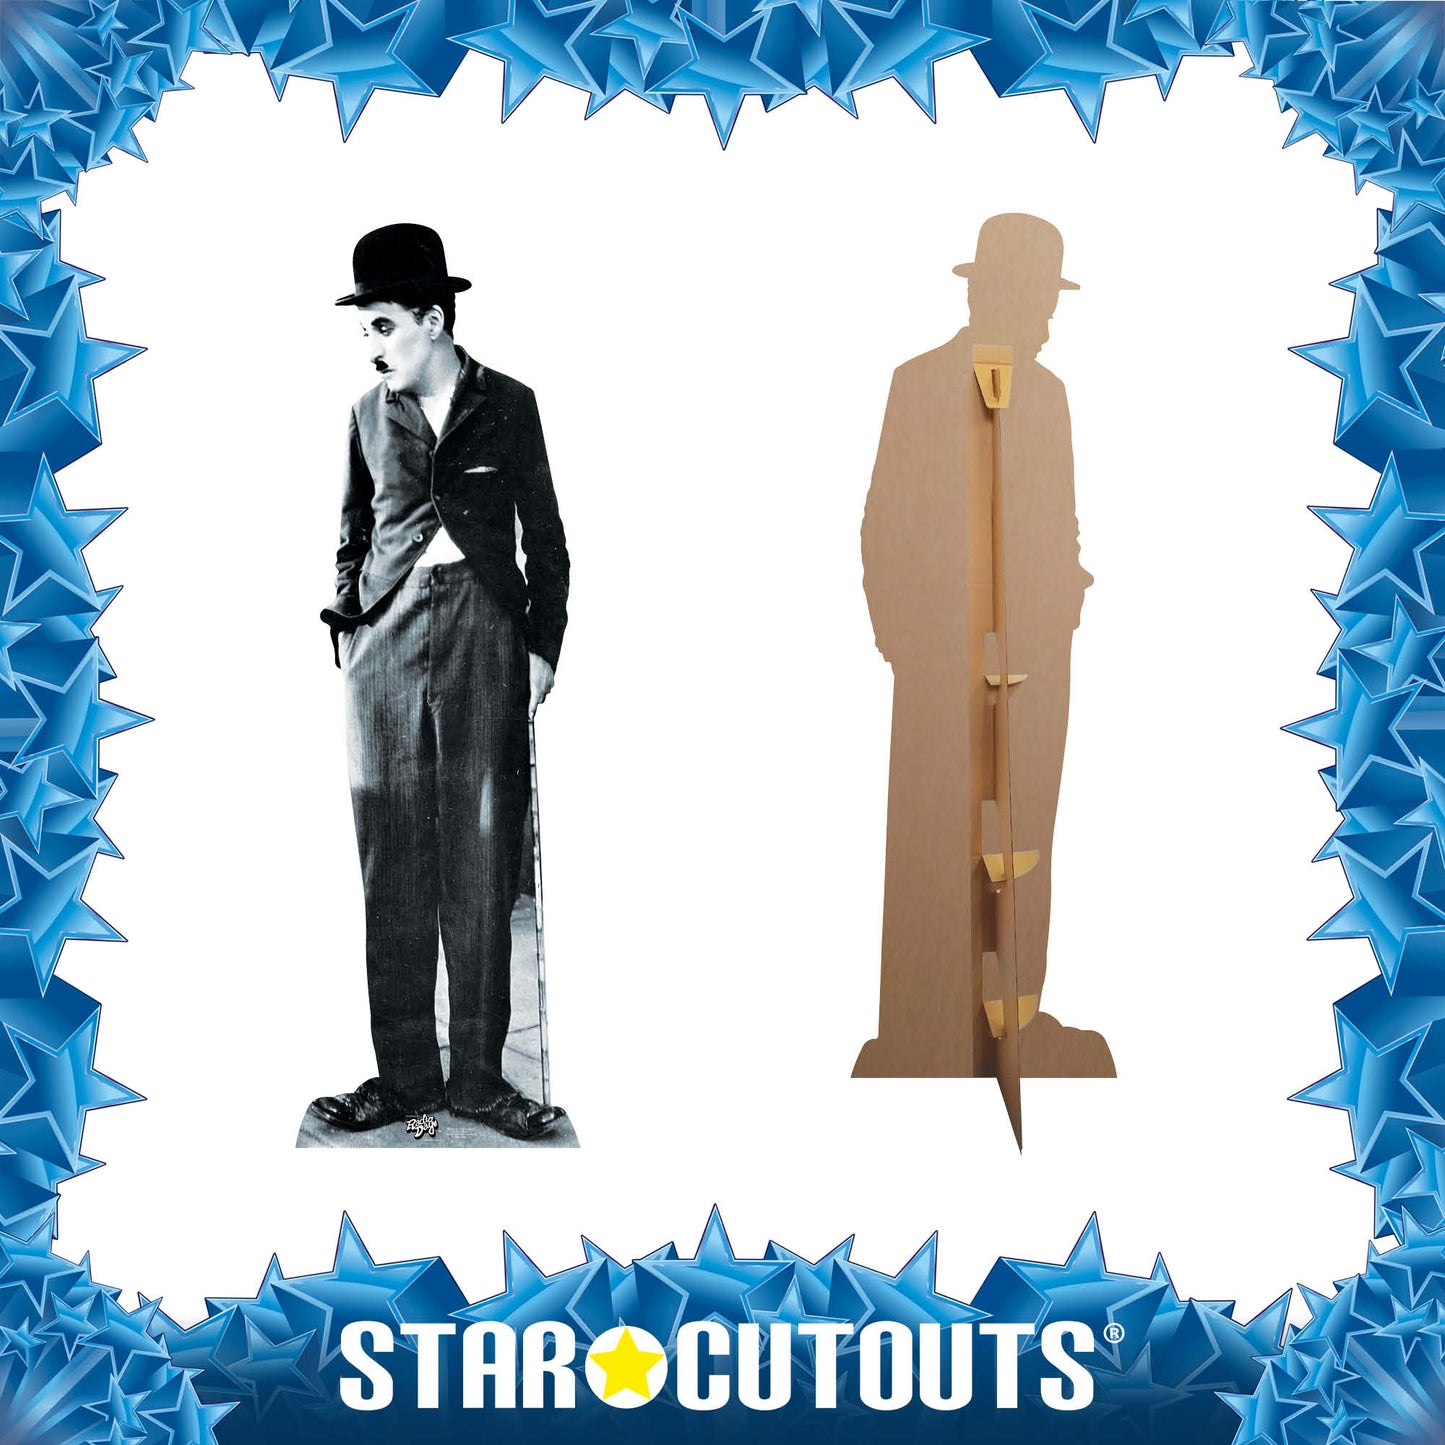 Charlie Chaplin Historical Figure Cardboard Cutout Lifesize